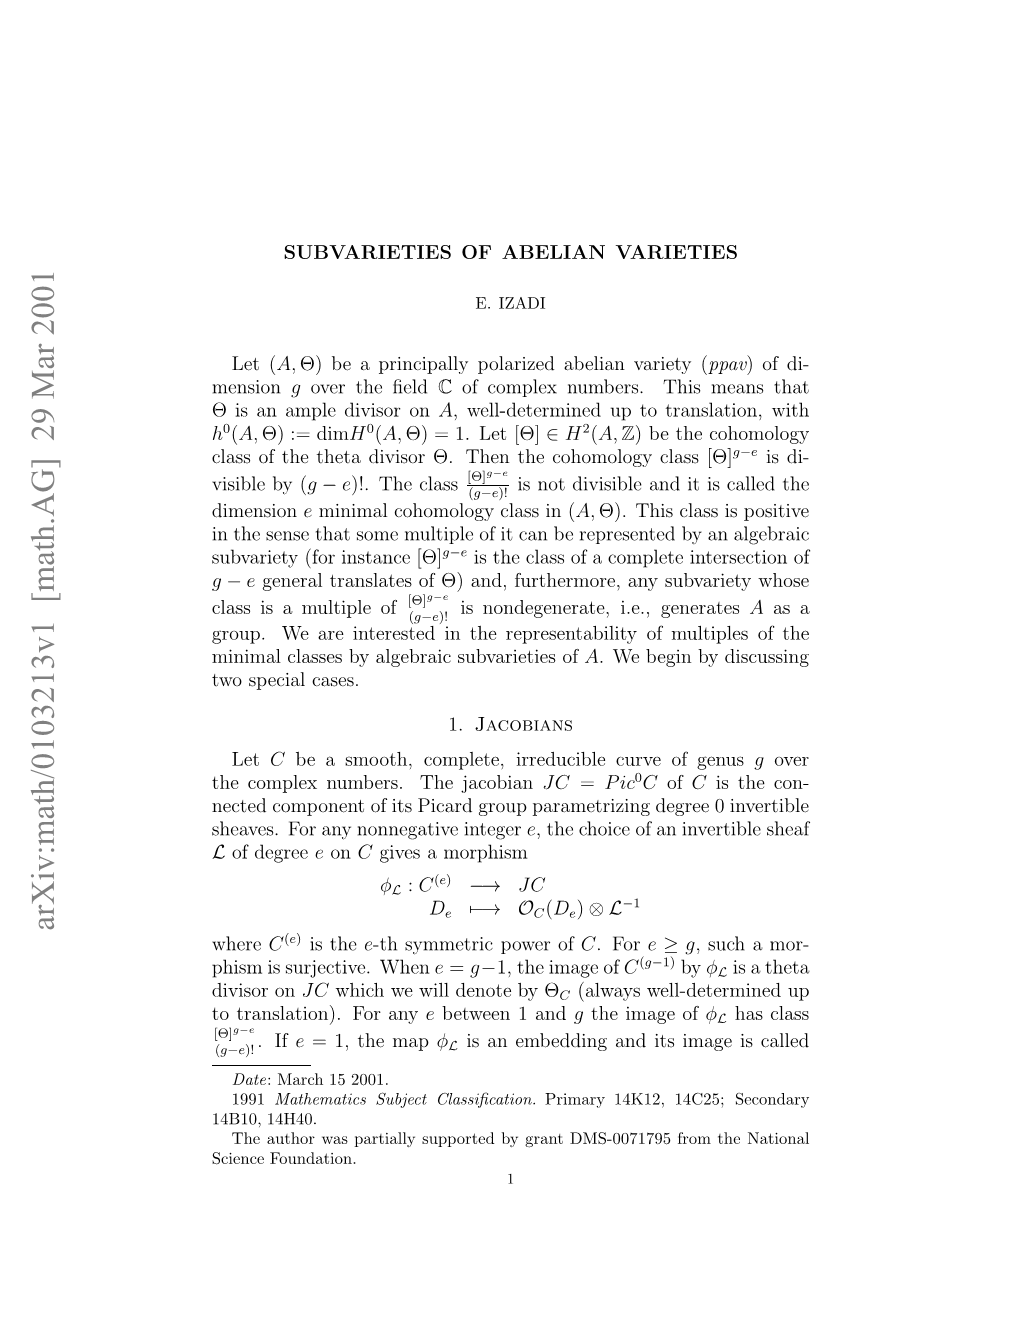 [Math.AG] 29 Mar 2001 L Etdcmoeto T Iadgopprmtiigdge Inver Integer 0 Nonnegative Degree Any Parametrizing for Group Sheaves